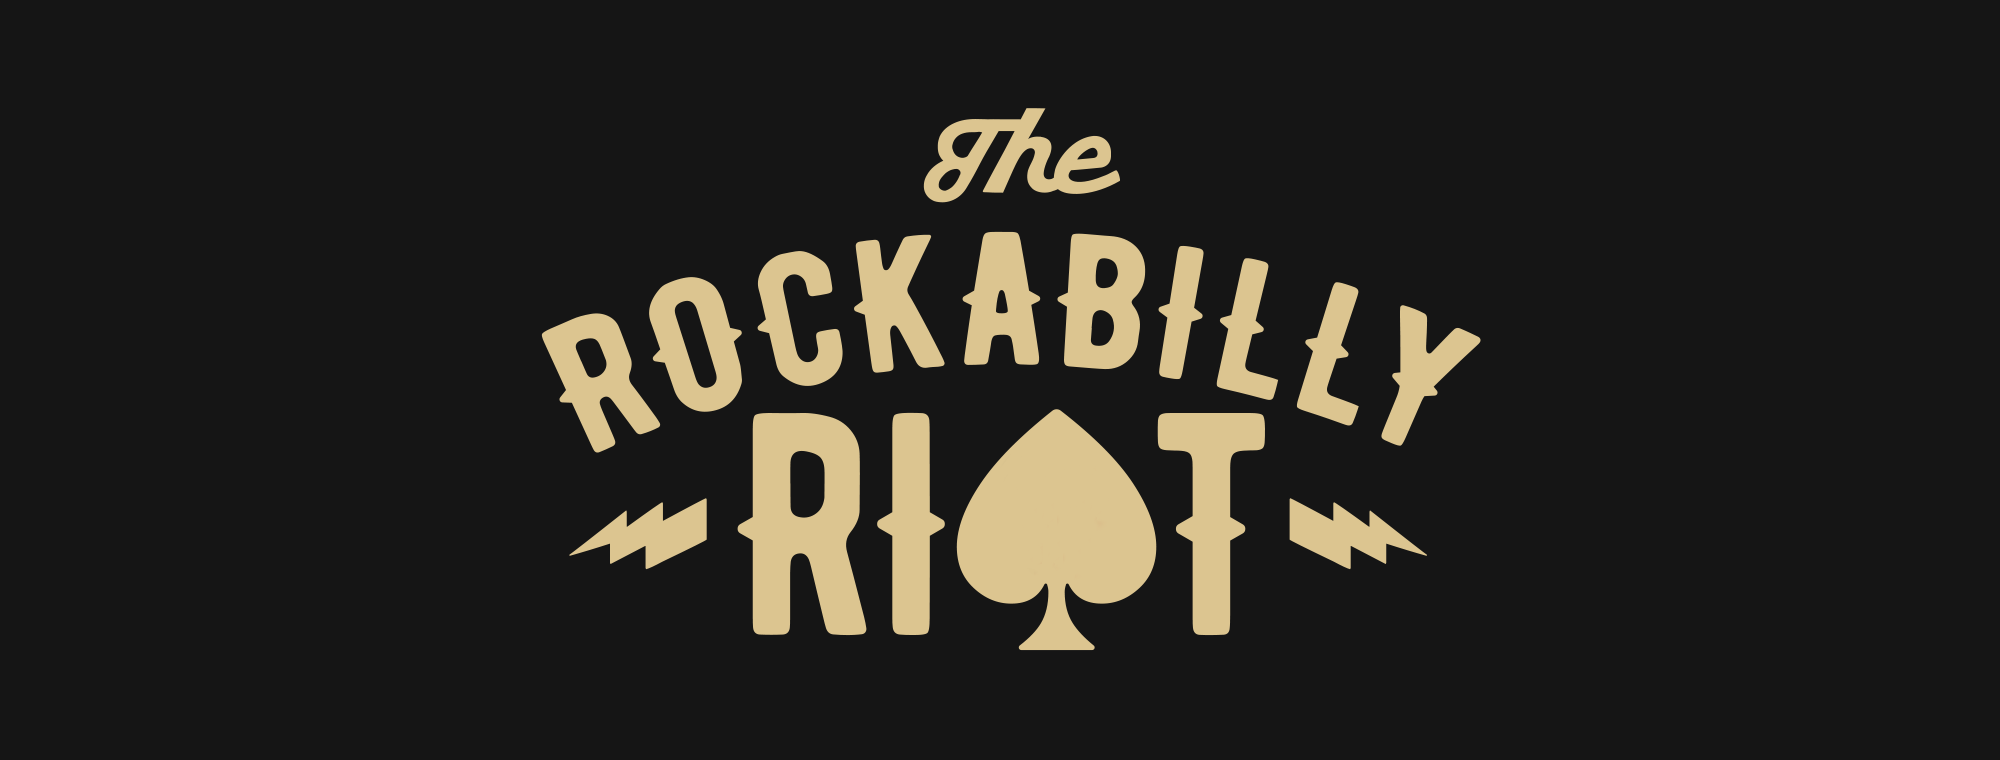 The Rockabilly Riot